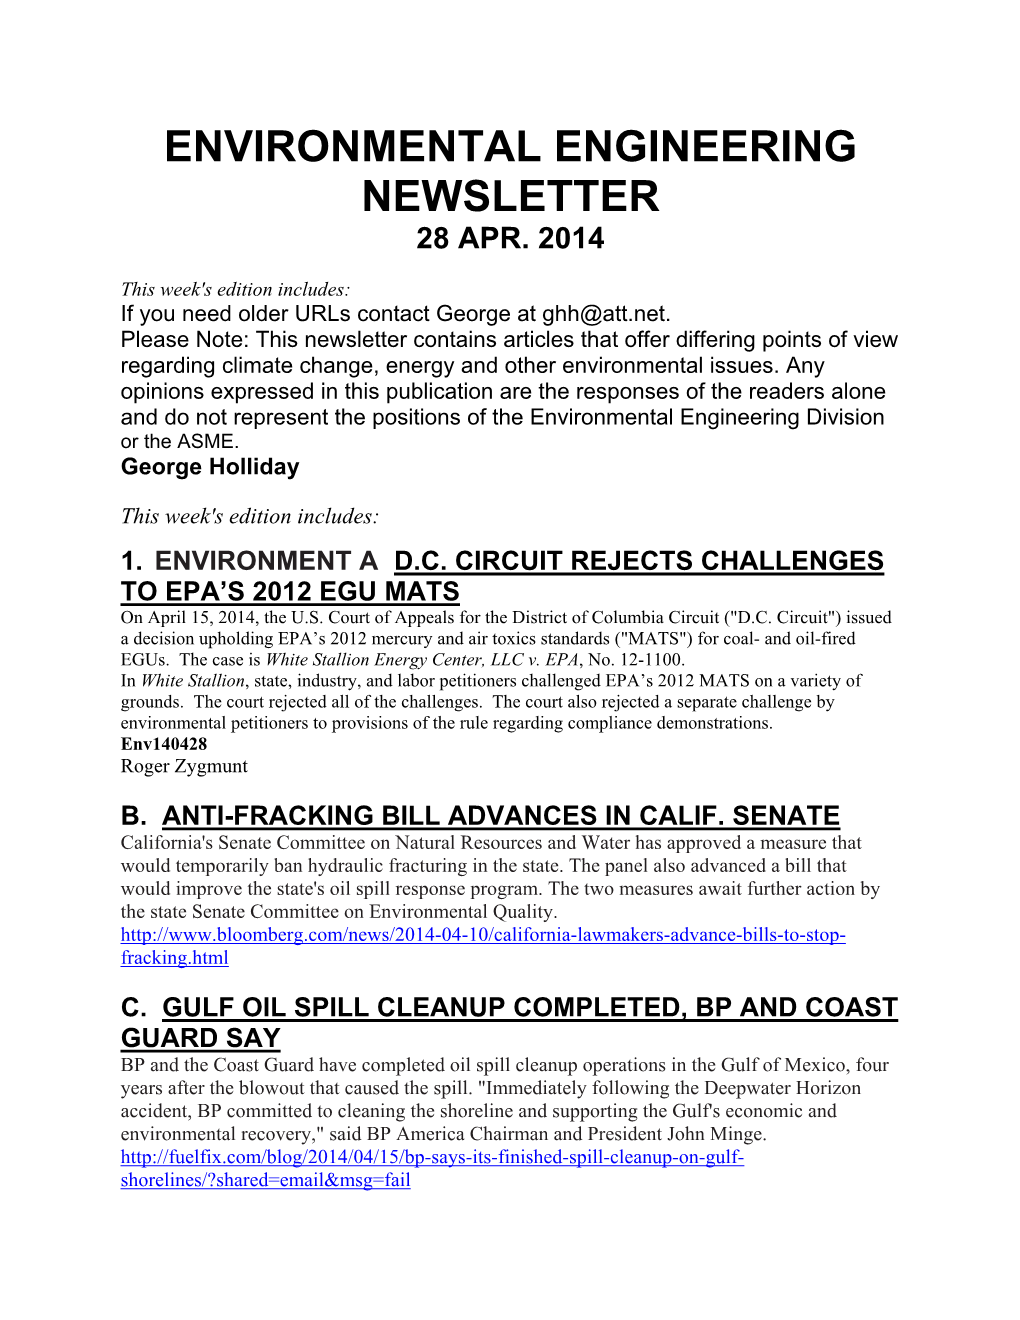 Environmental Engineering Newsletter 28 Apr